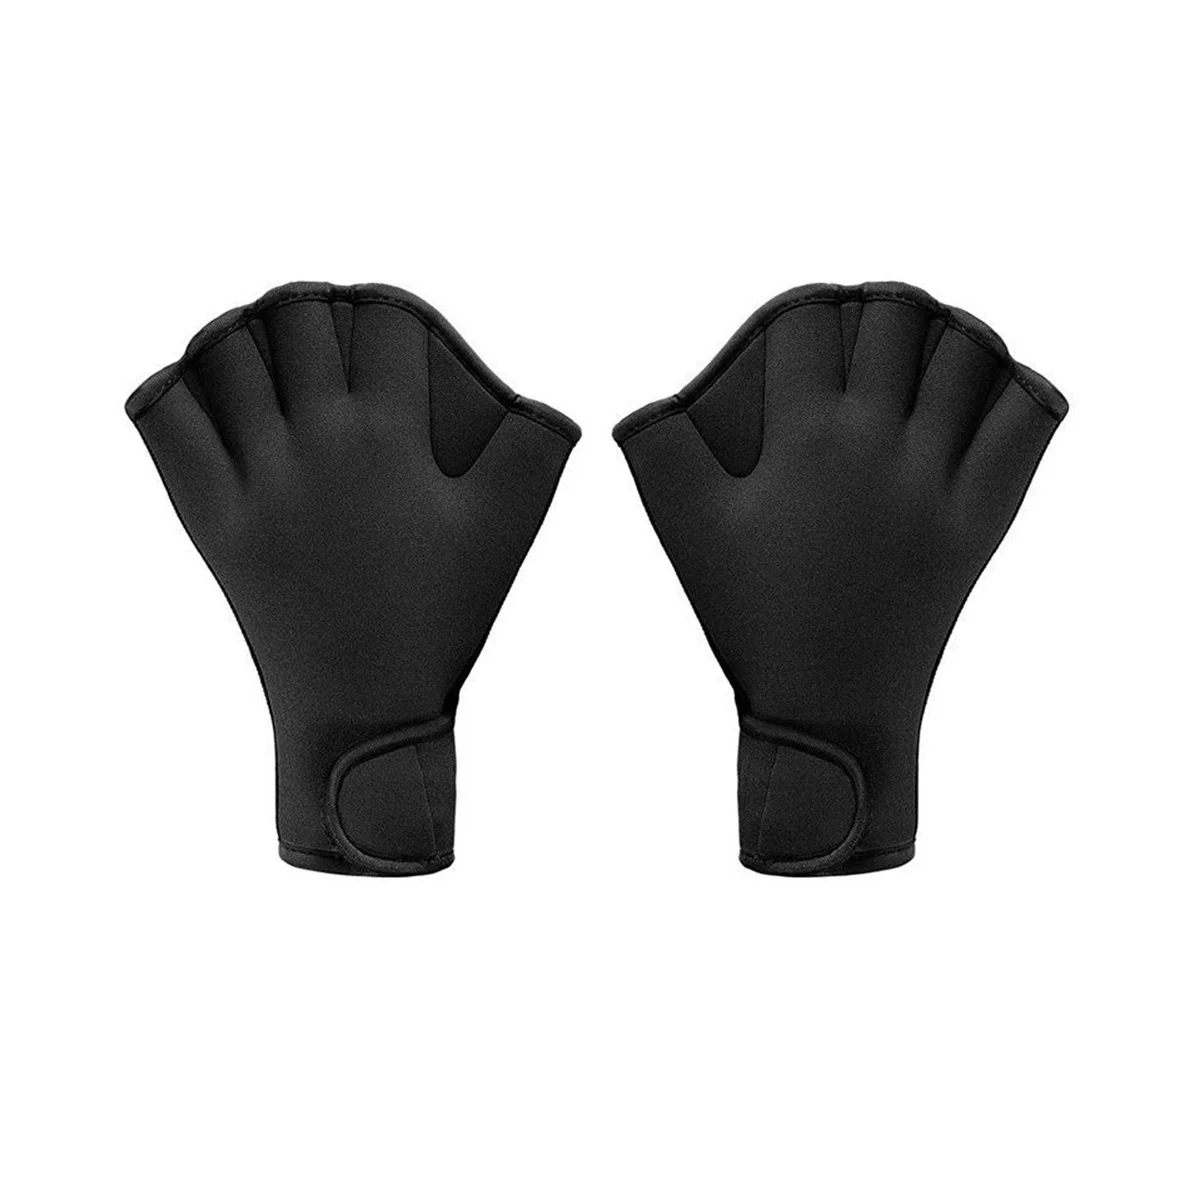 

Swimming Training, Diving Equipment, Anti-Slip Semi-Fingered Gloves for Adults and Children Swimming Training,Black+M